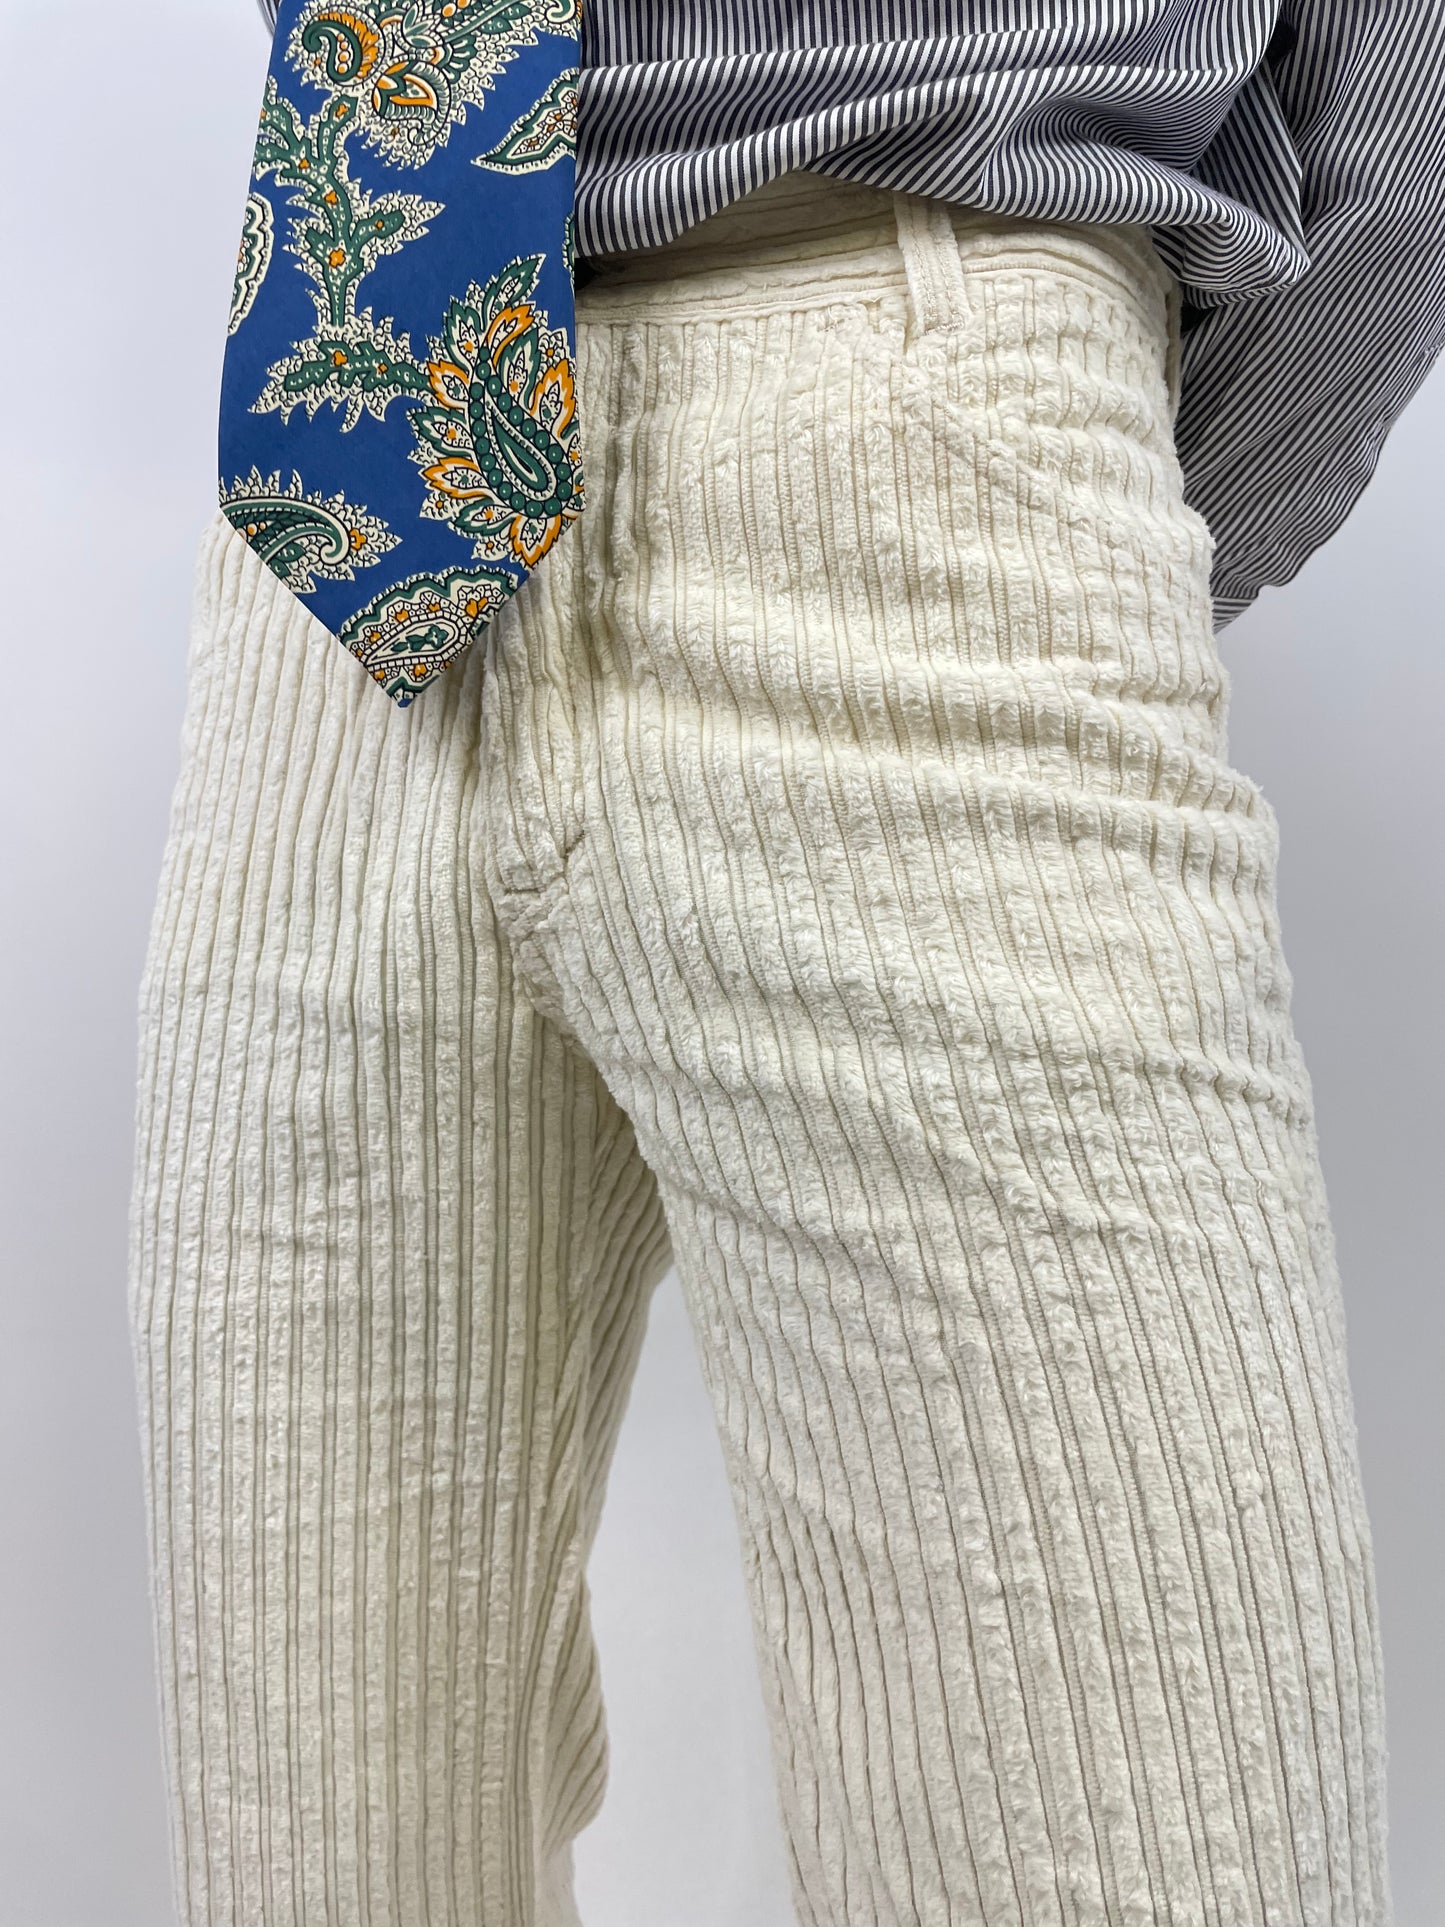 Pantalone Blue Moon Quality Clothing 1870s